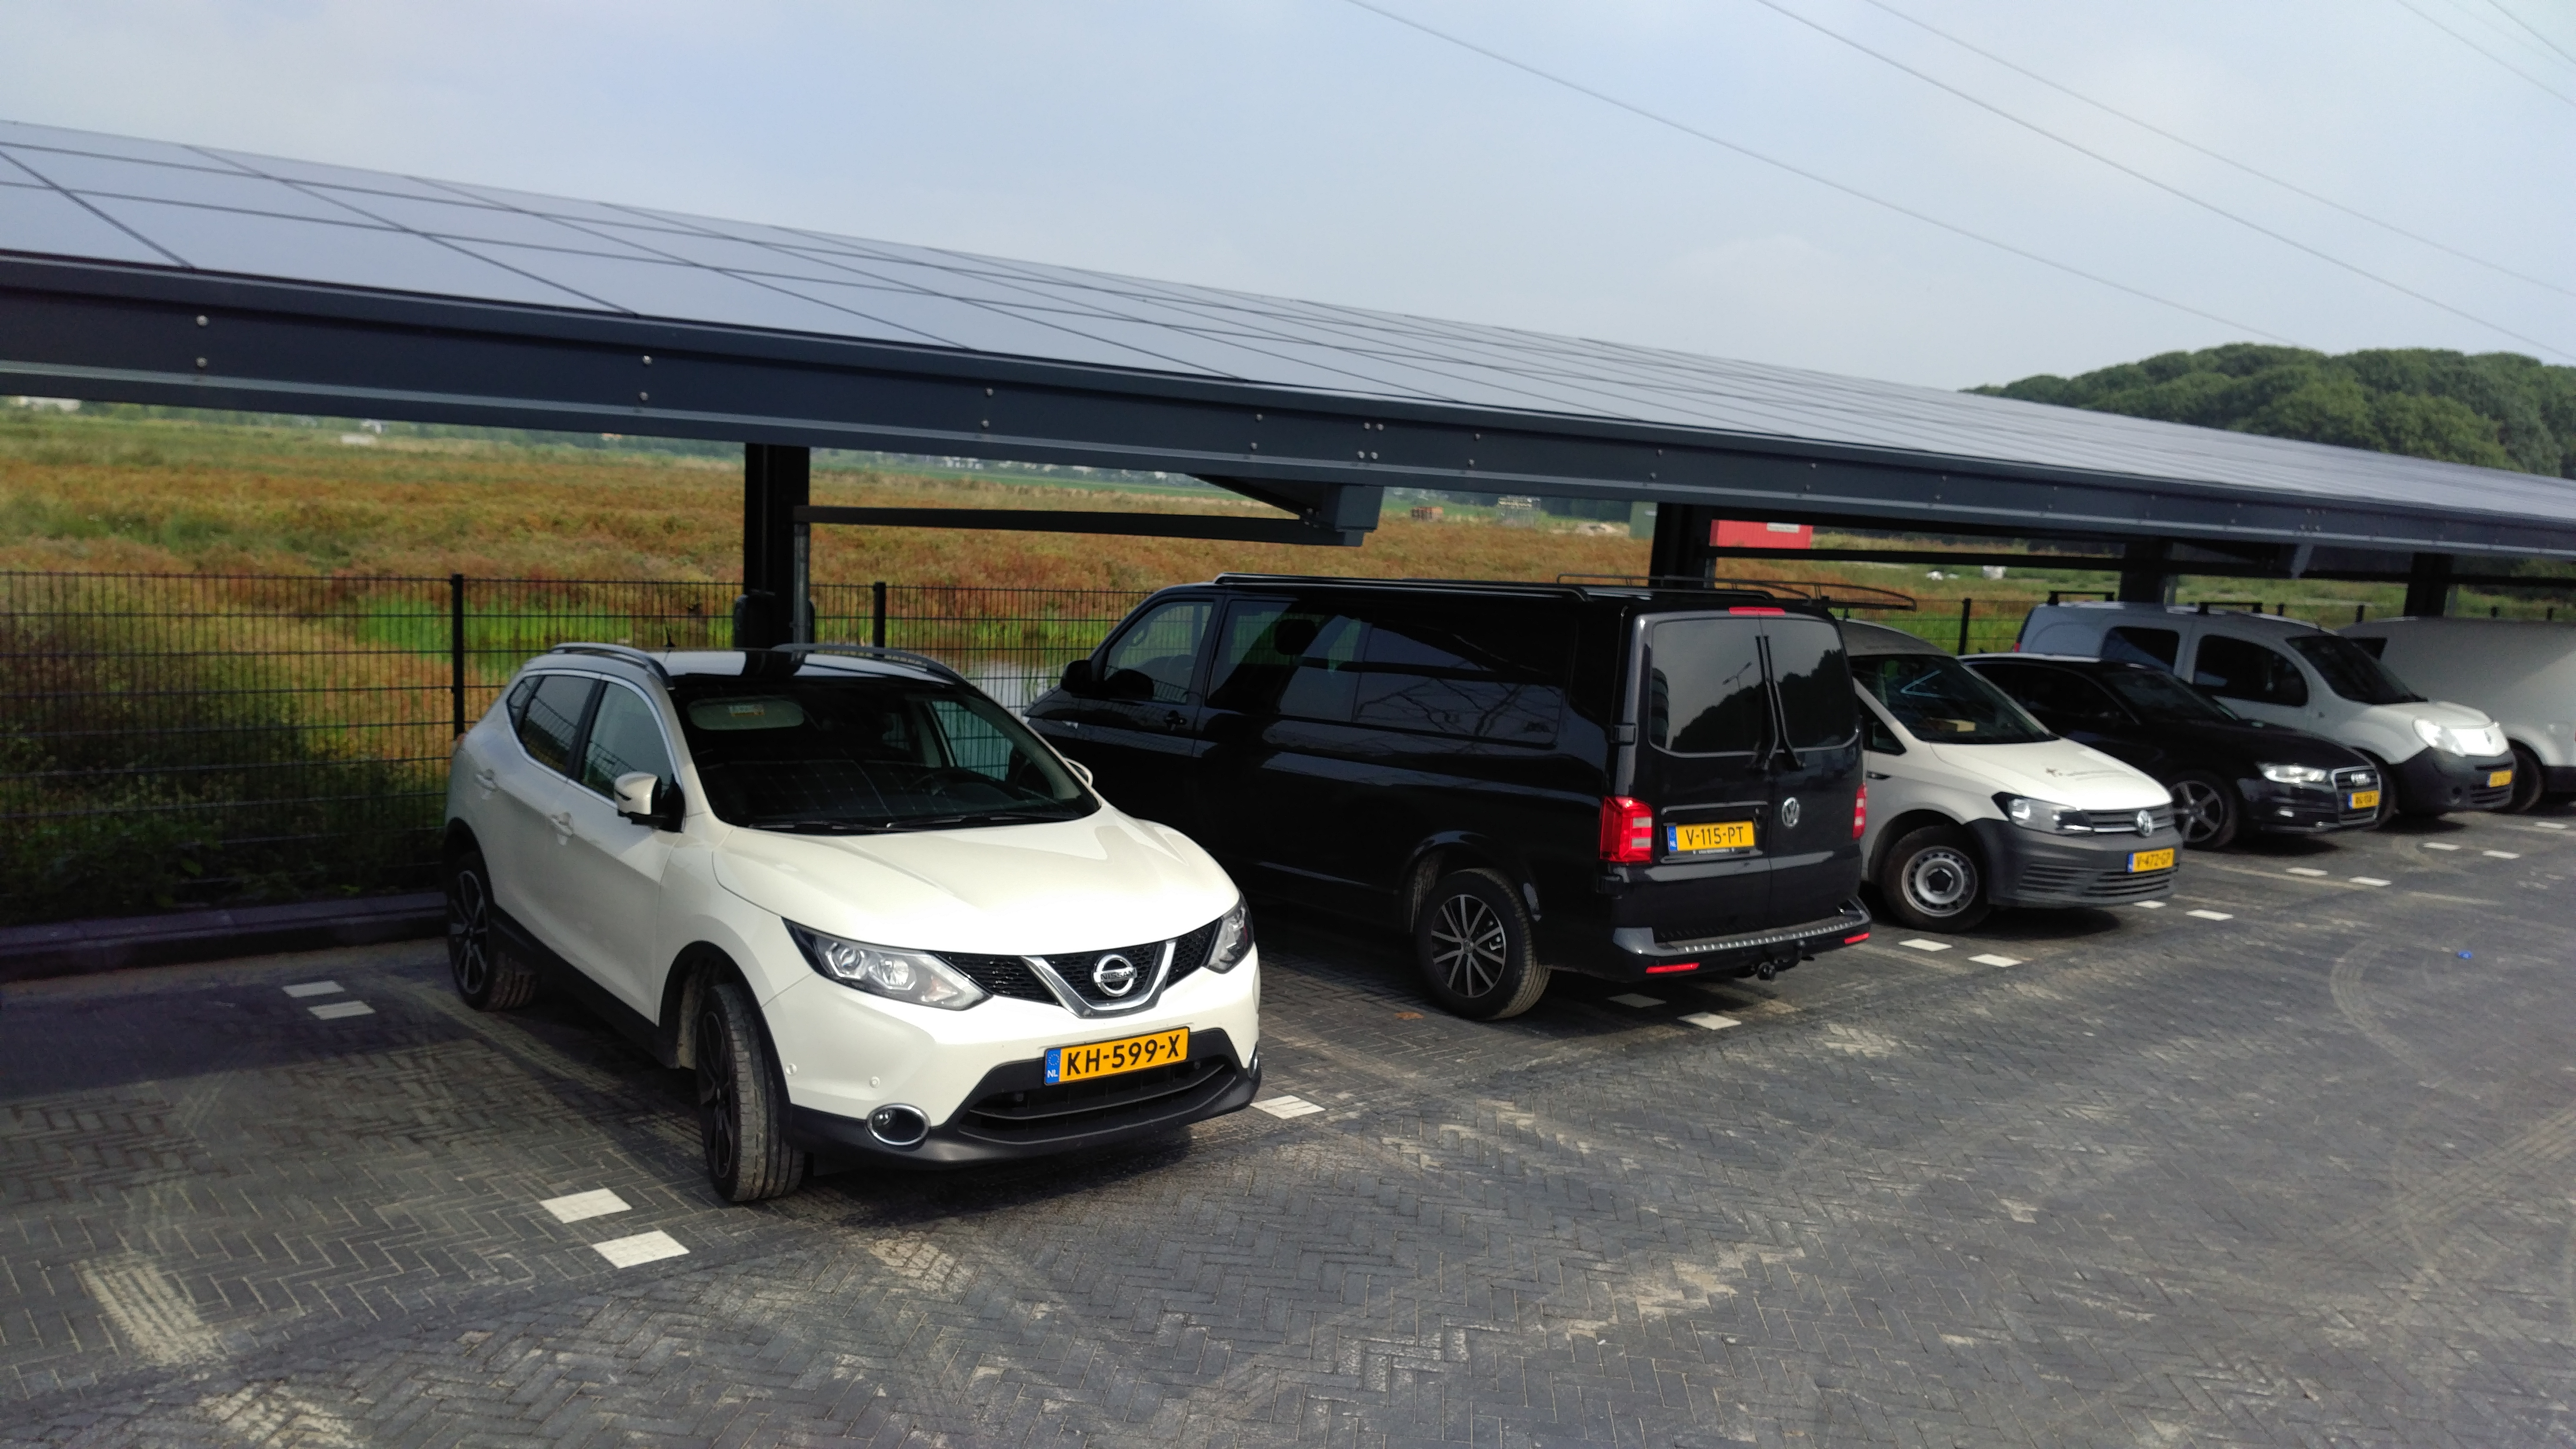 Solar parking